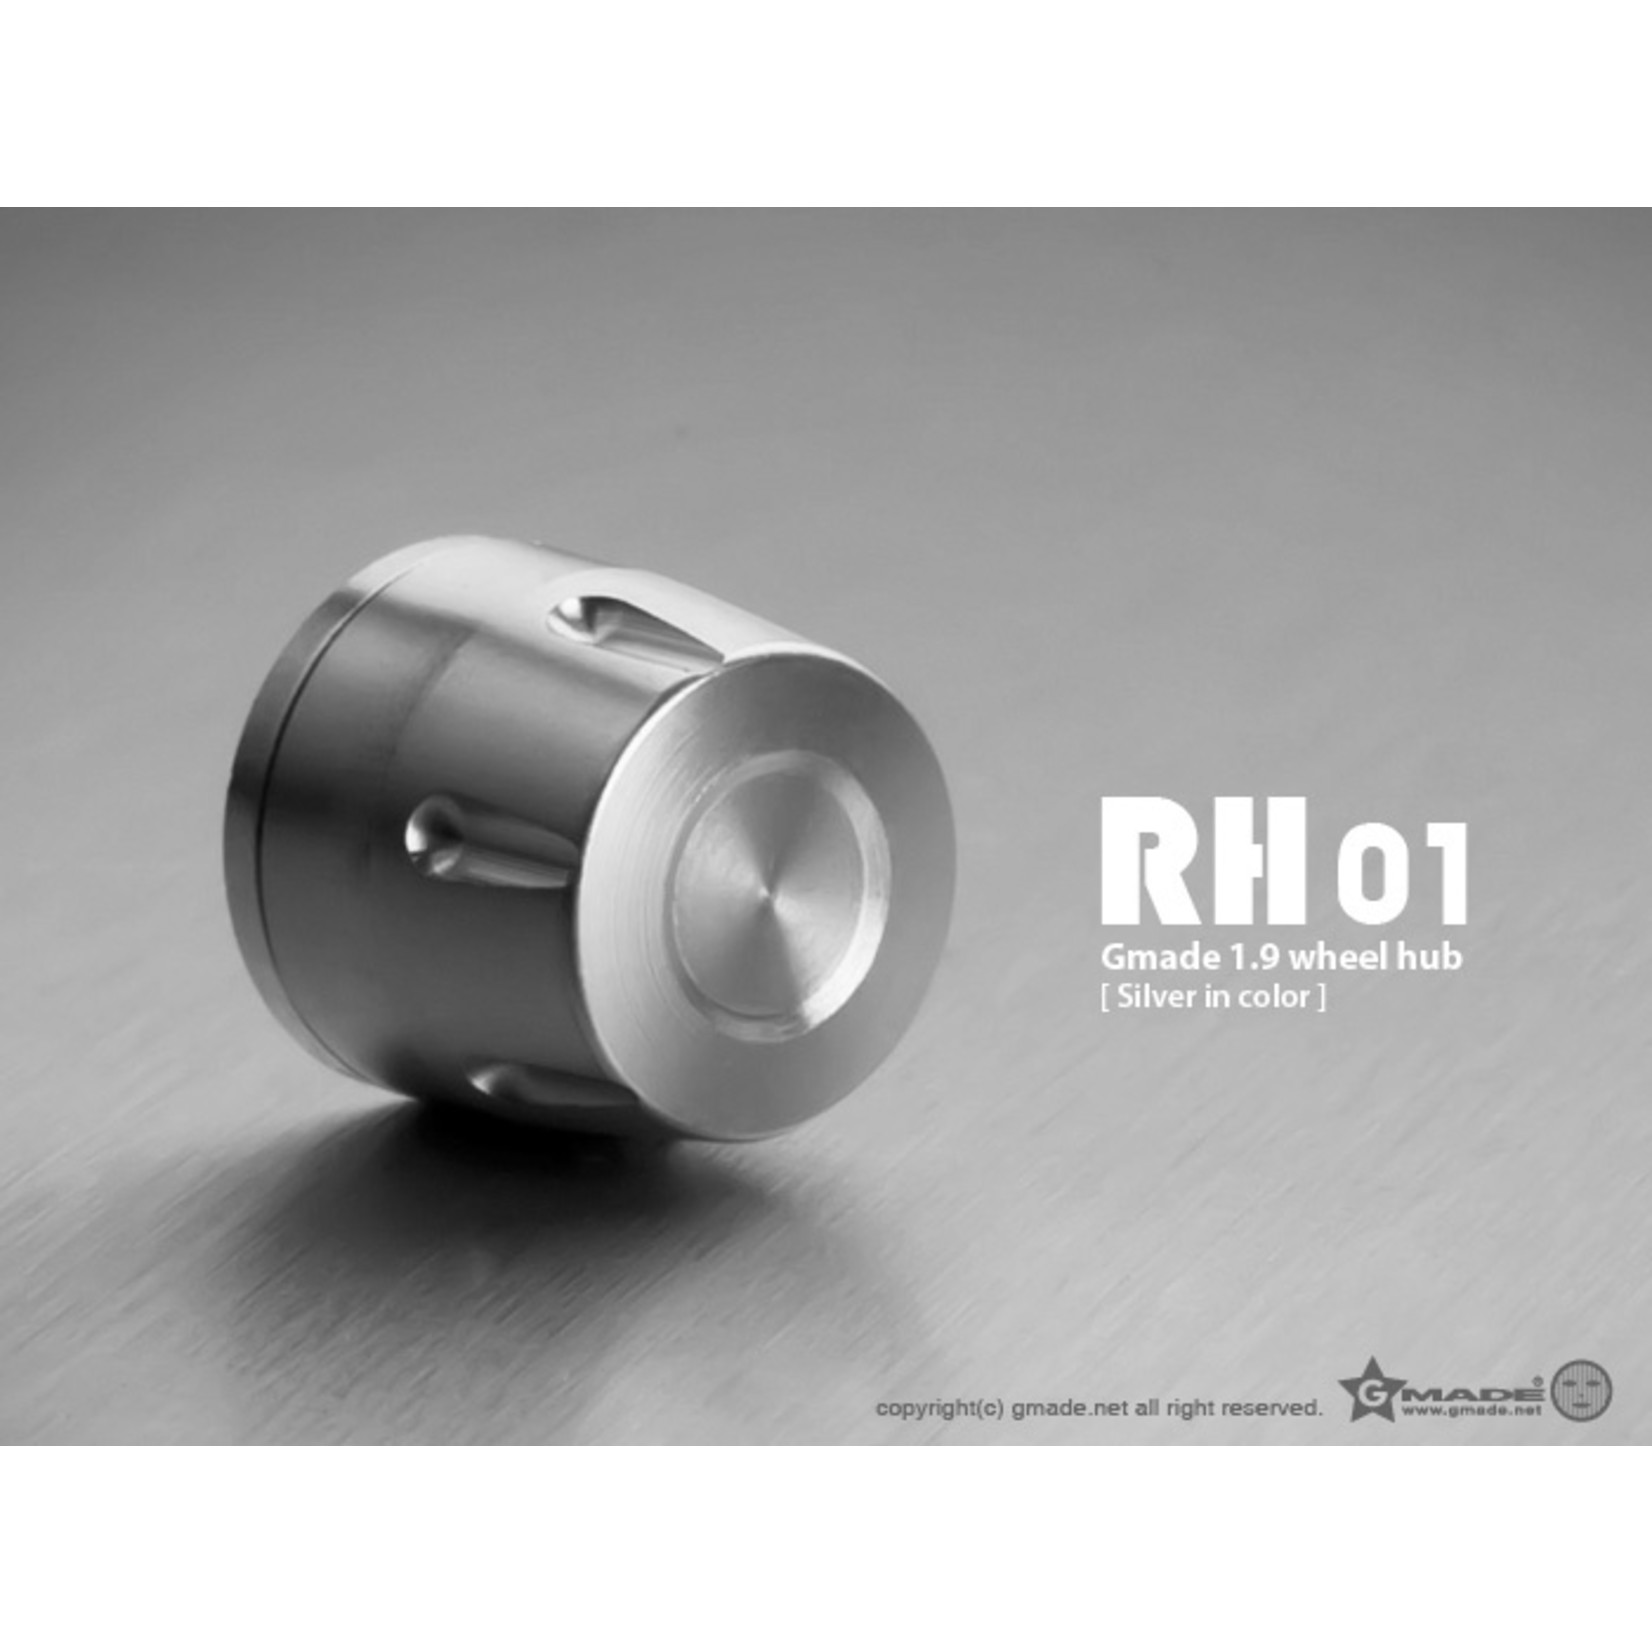 Gmade 1.9 RH01 Wheel Hubs (Silver) (4)